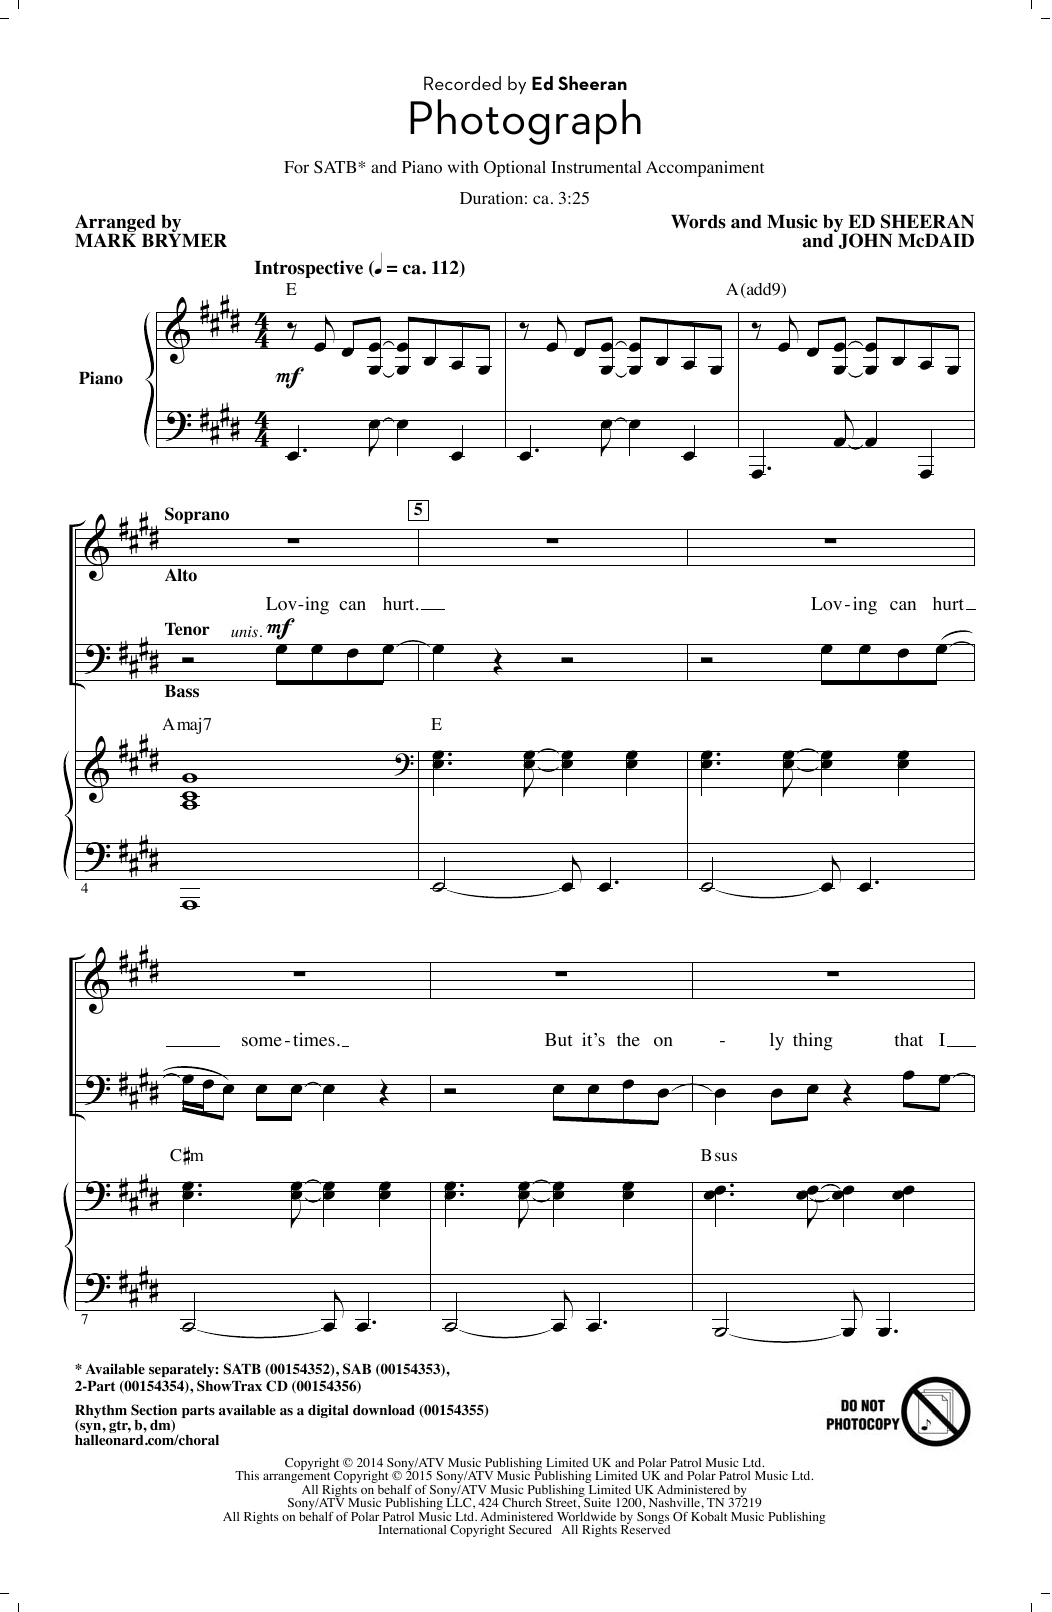 Ed Sheeran Photograph (arr. Mark Brymer) Sheet Music Notes & Chords for SATB - Download or Print PDF